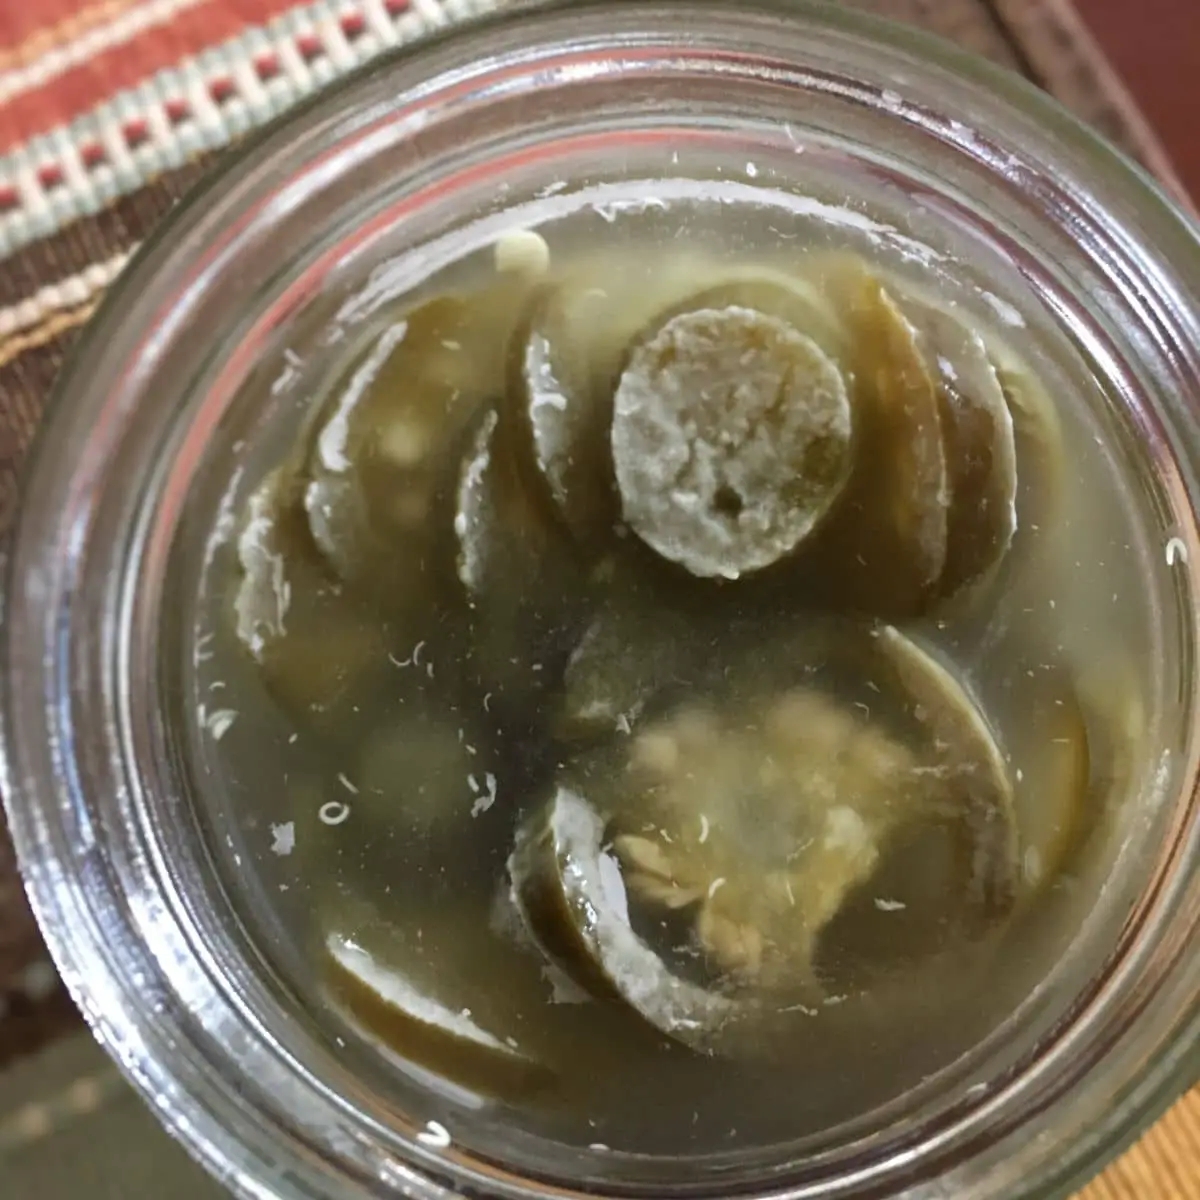 kahm yeast growing on fermented jalapenos in a jar